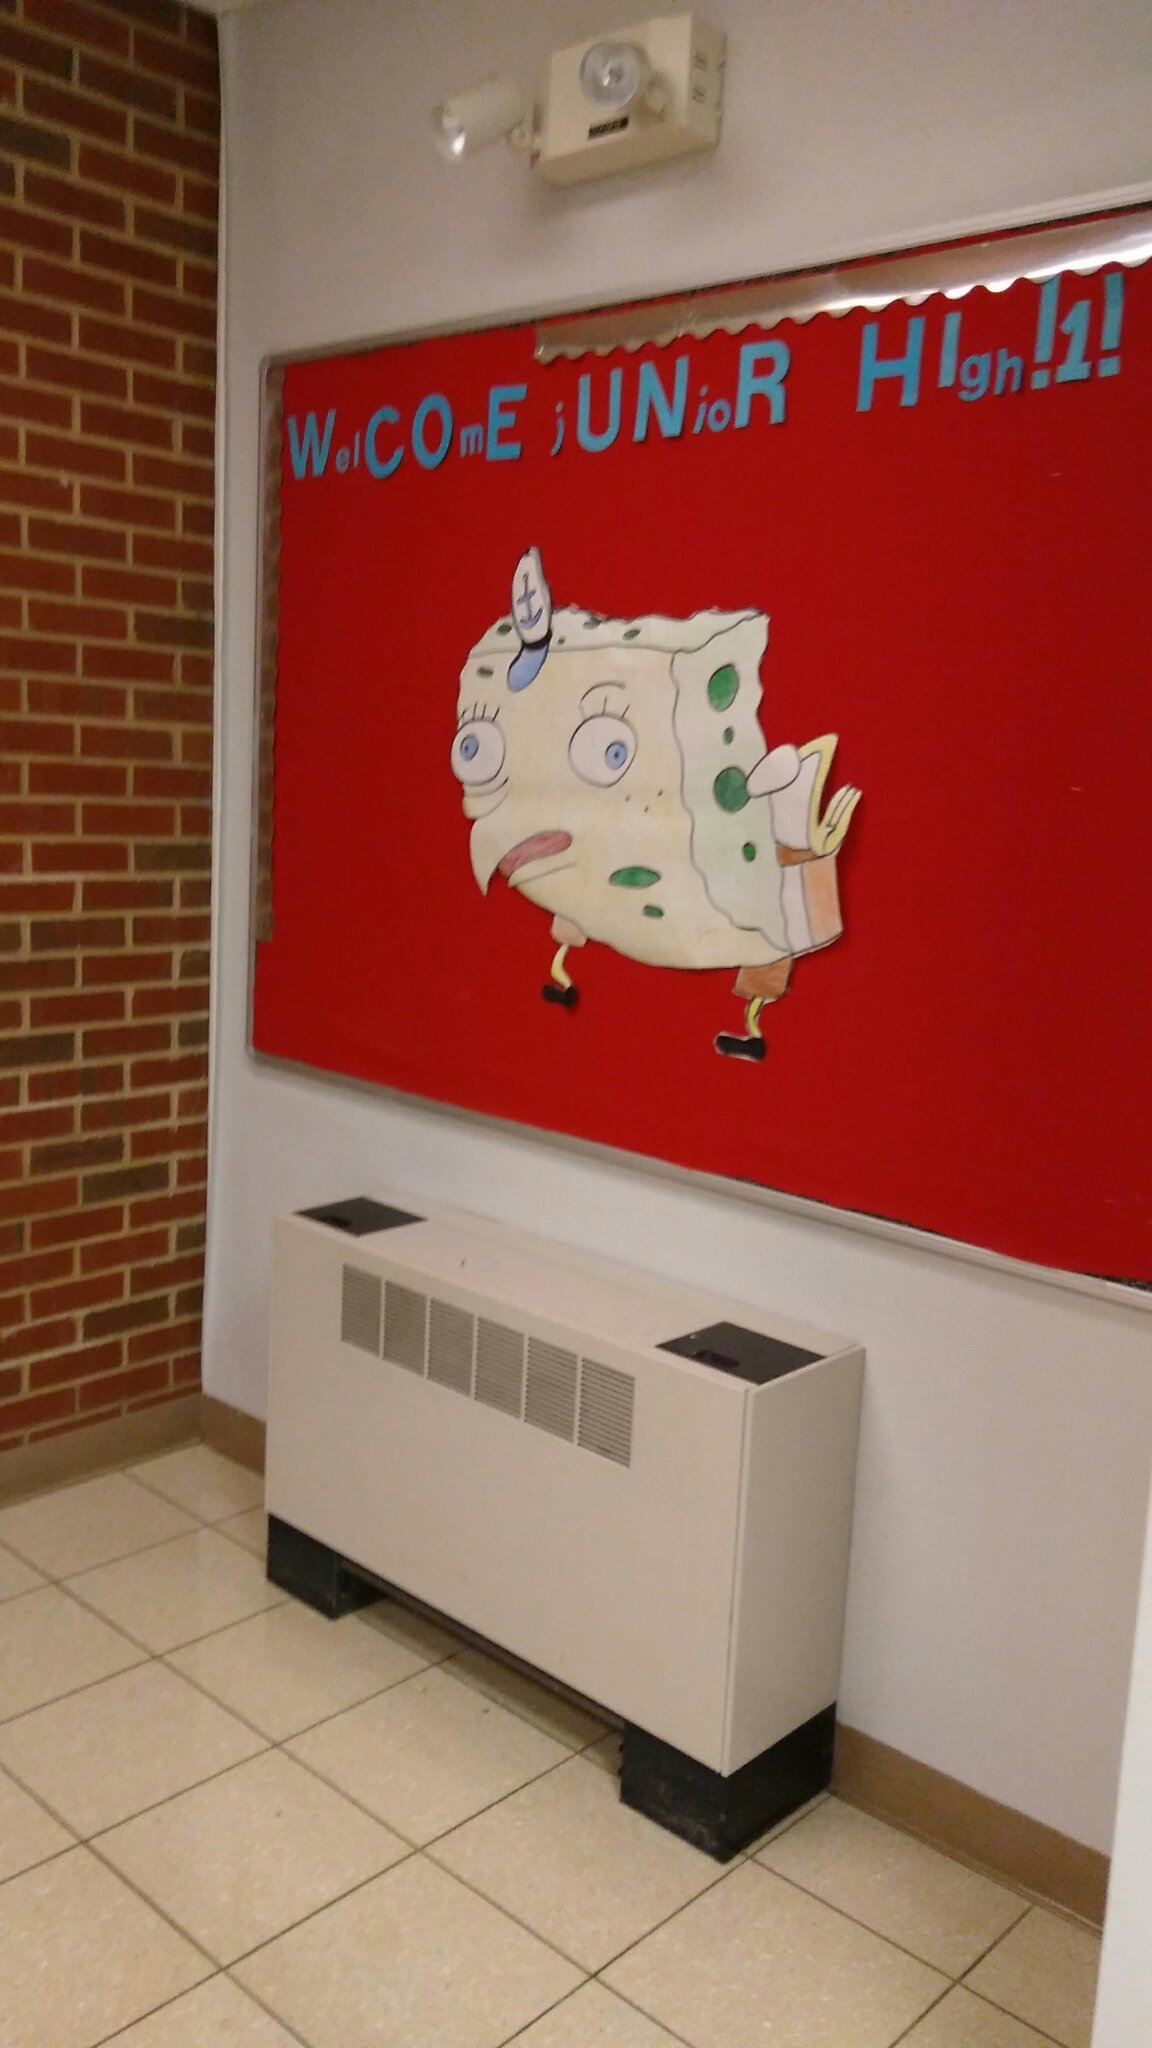 My school loves spongebob memes.